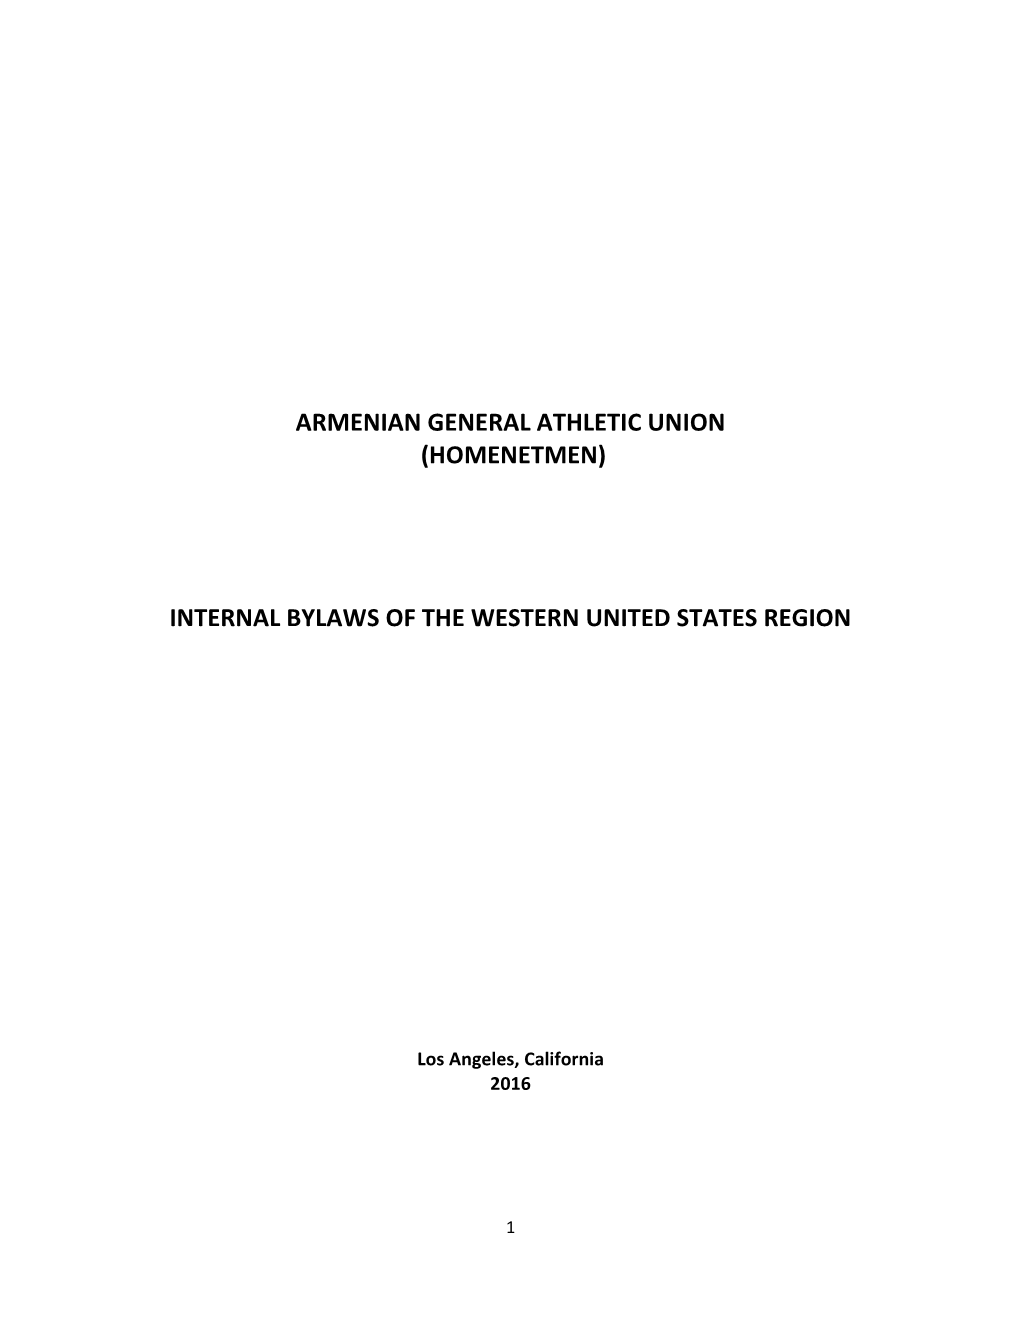 Armenian General Athletic Union (Homenetmen) Internal Bylaws of the Western United States Region